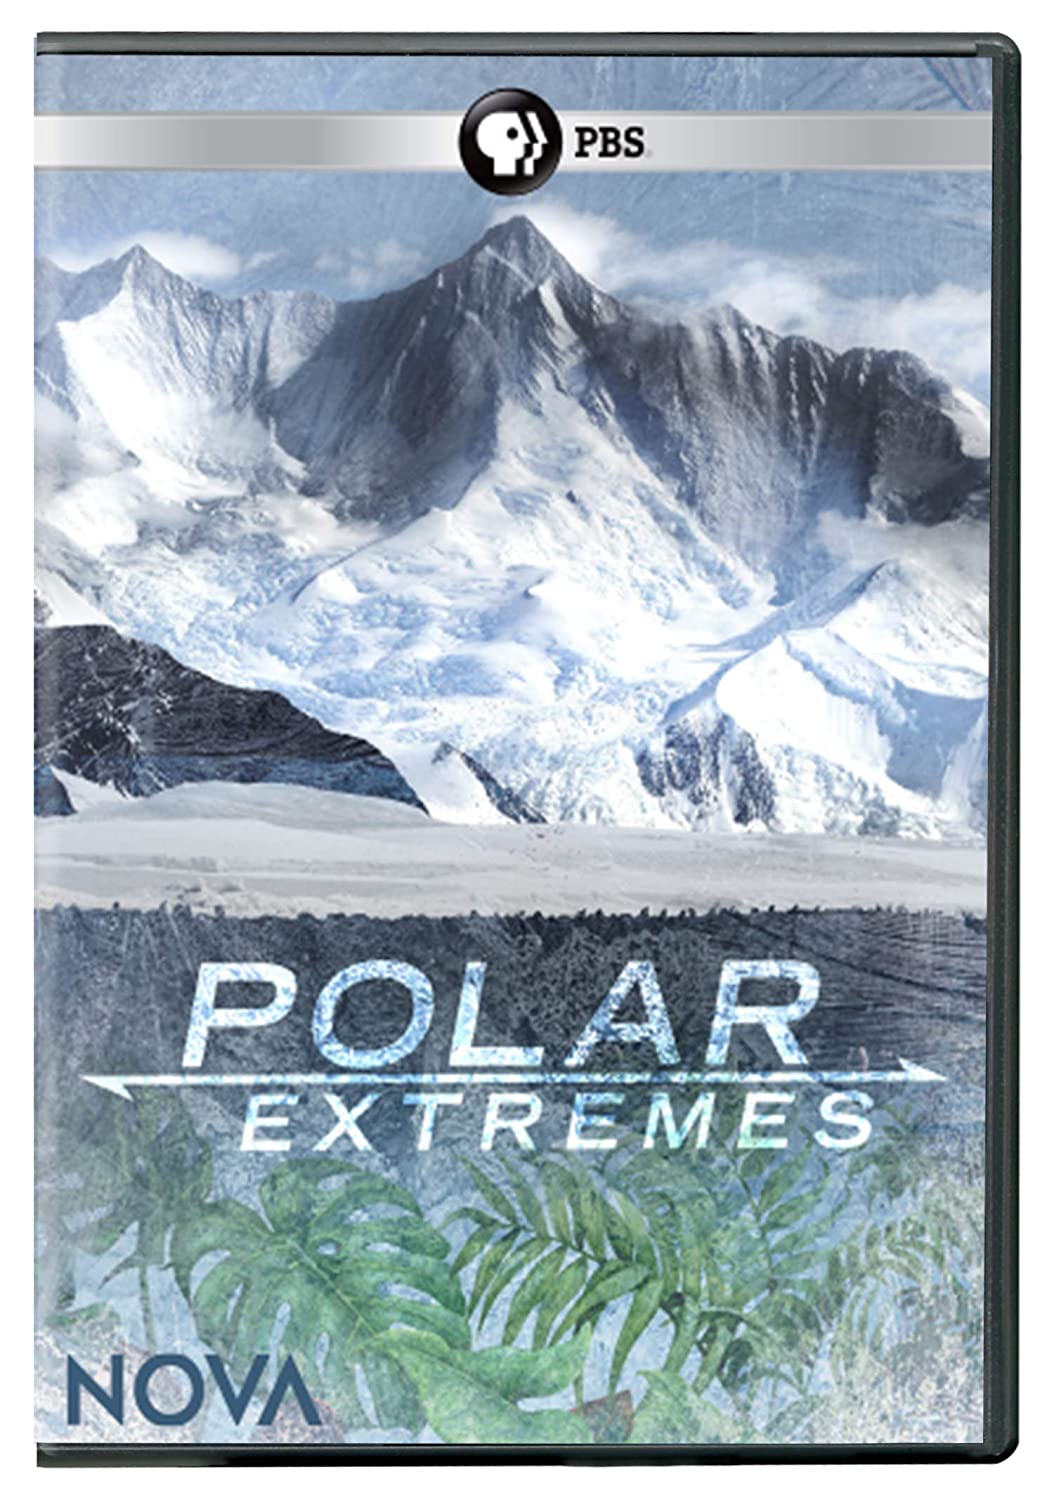 NOVA-Polar Extremen GG NLSUBBED 1080p WEB x264-DDF